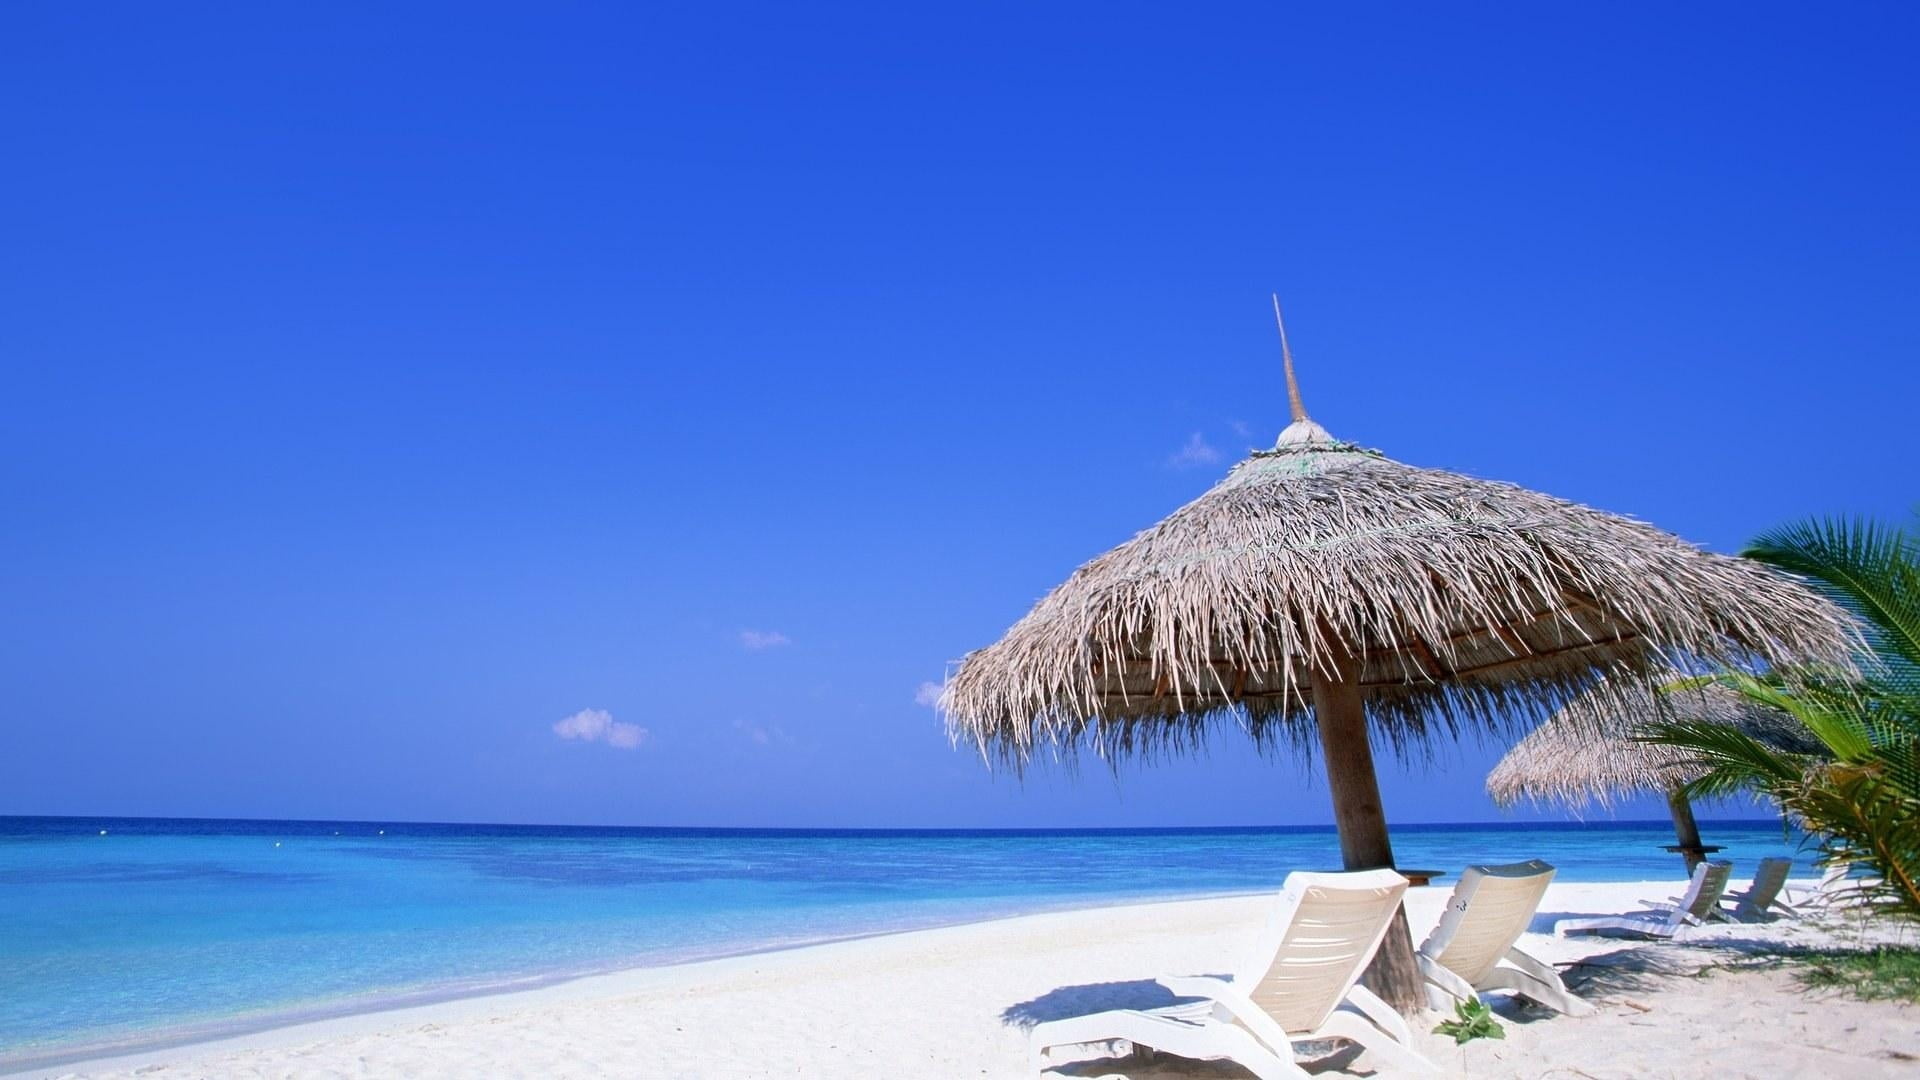 Beach Umbrella: Beach lounge, Seashore, Brolly, Parasol, Sunshade, Gamp. 1920x1080 Full HD Background.